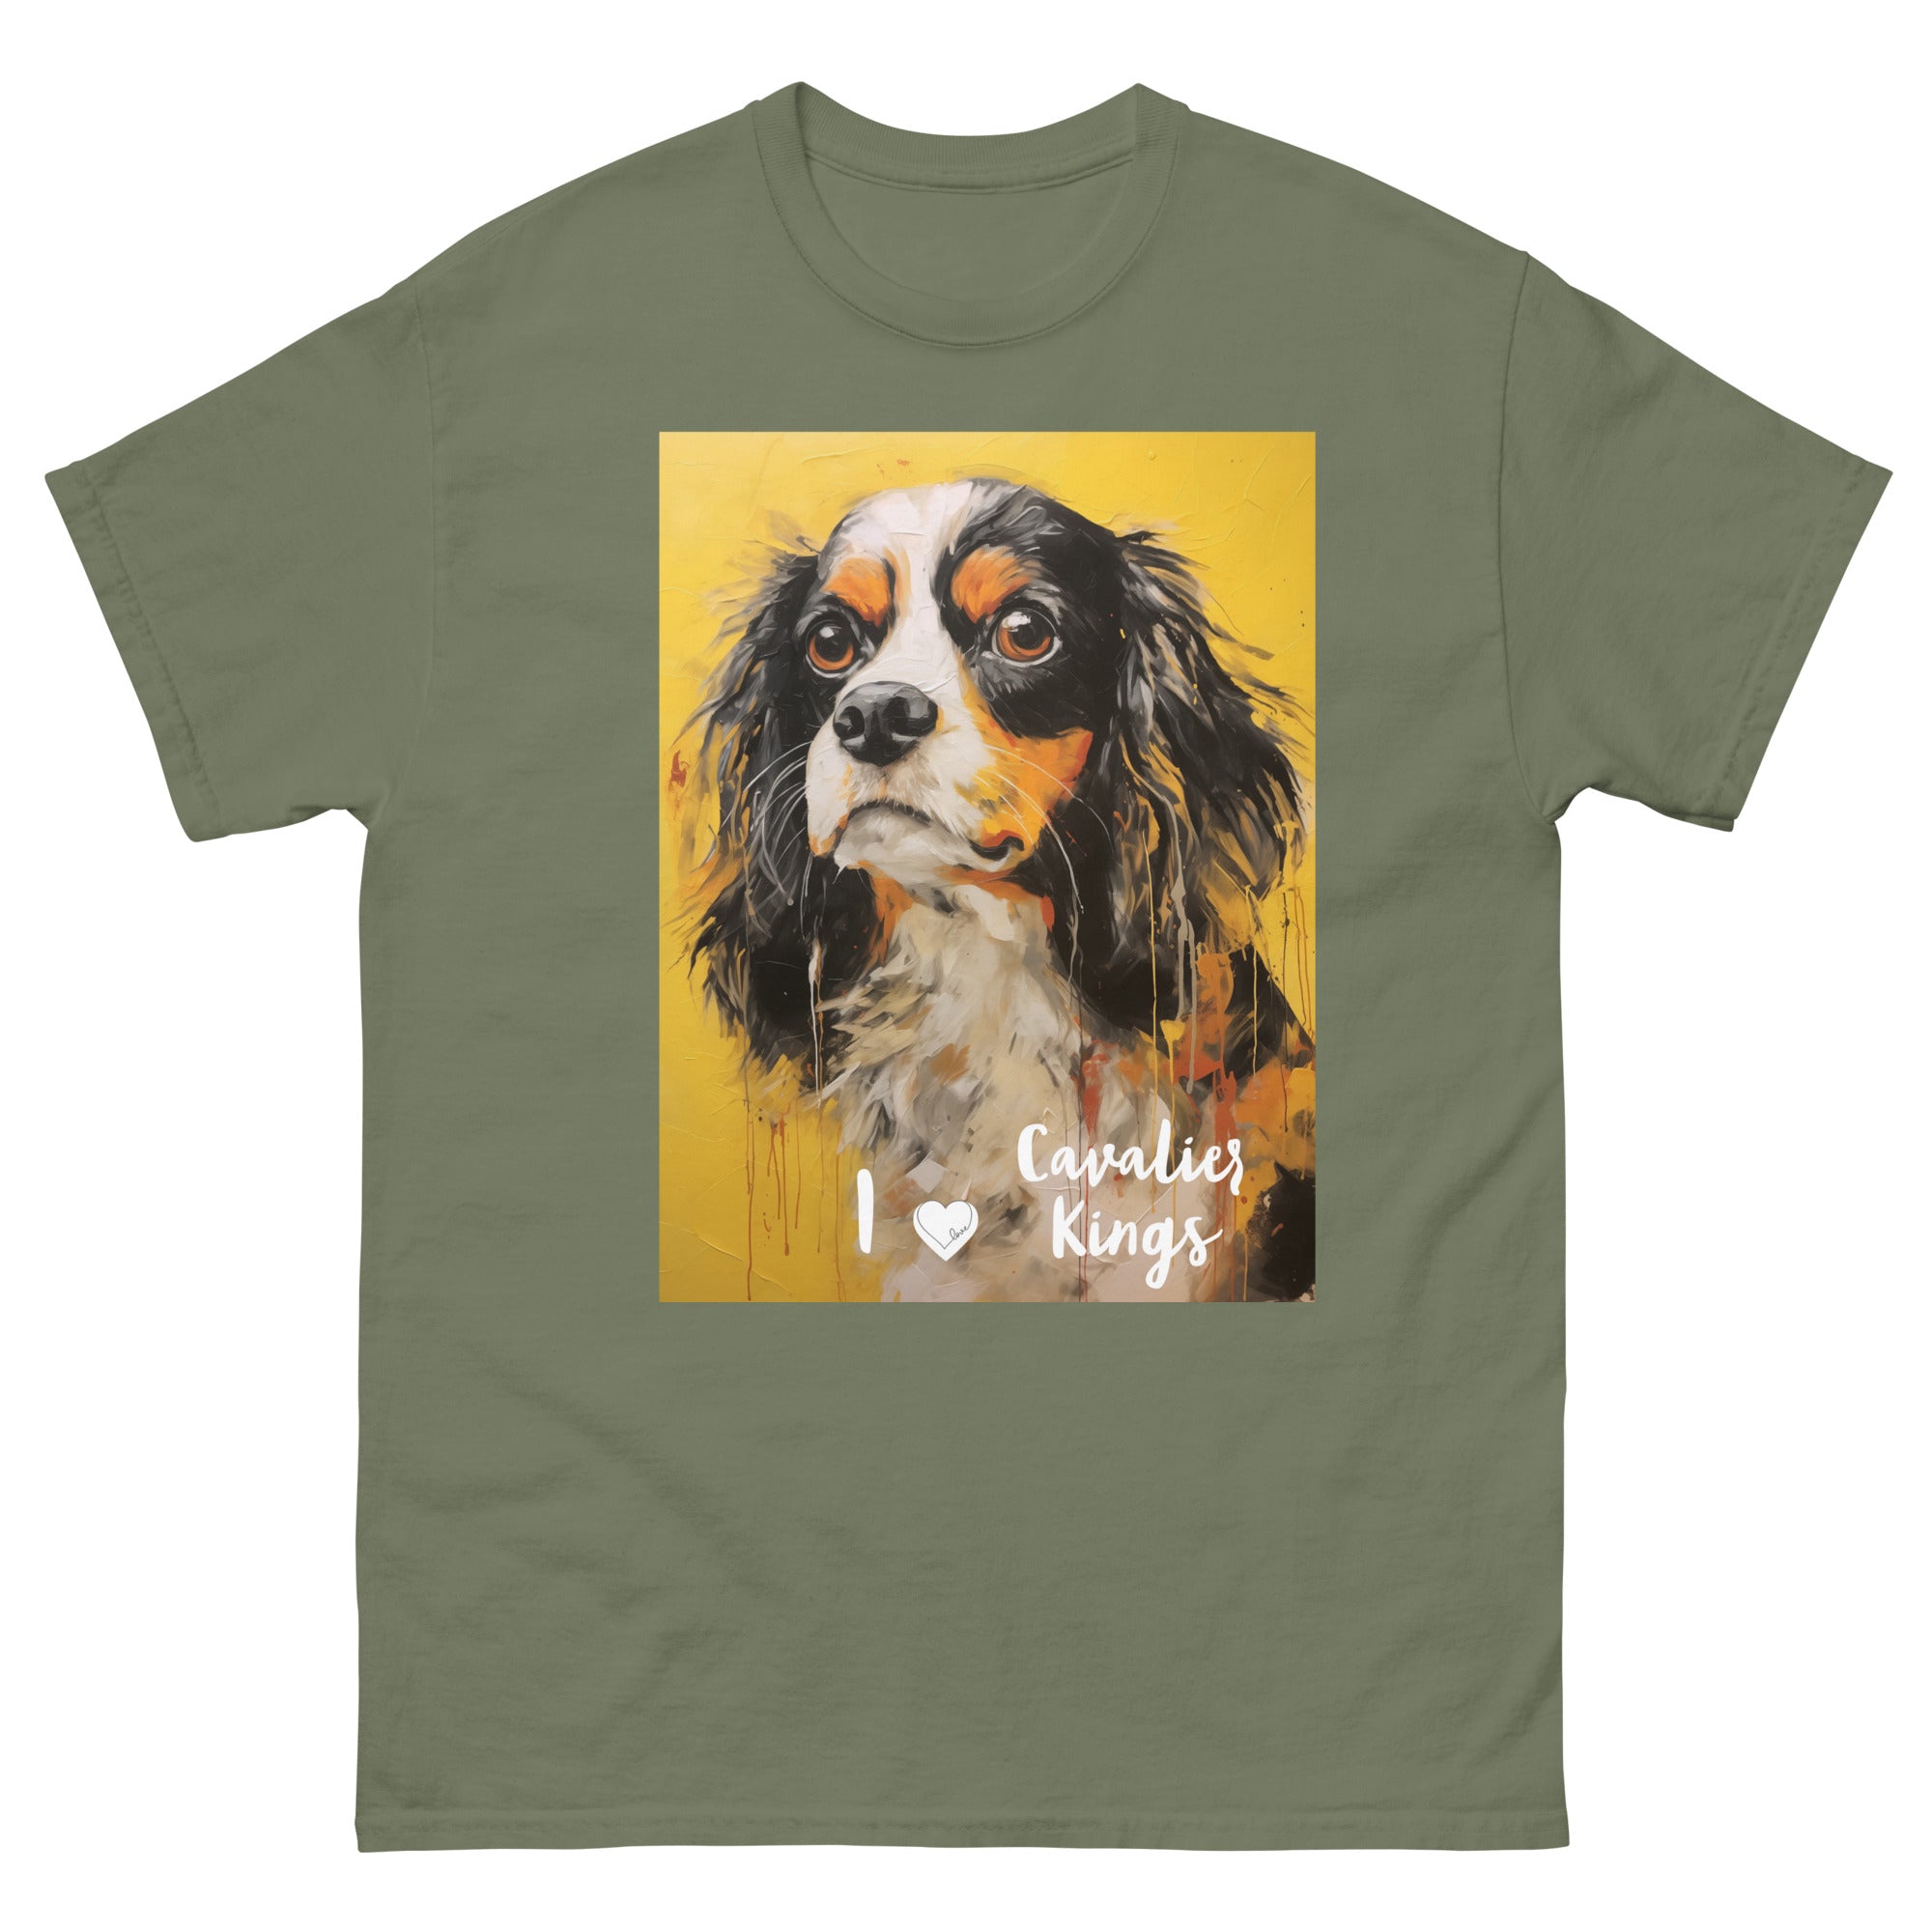 Men's classic tee - I ❤ DOGS - Cavalier King Charles Spaniel